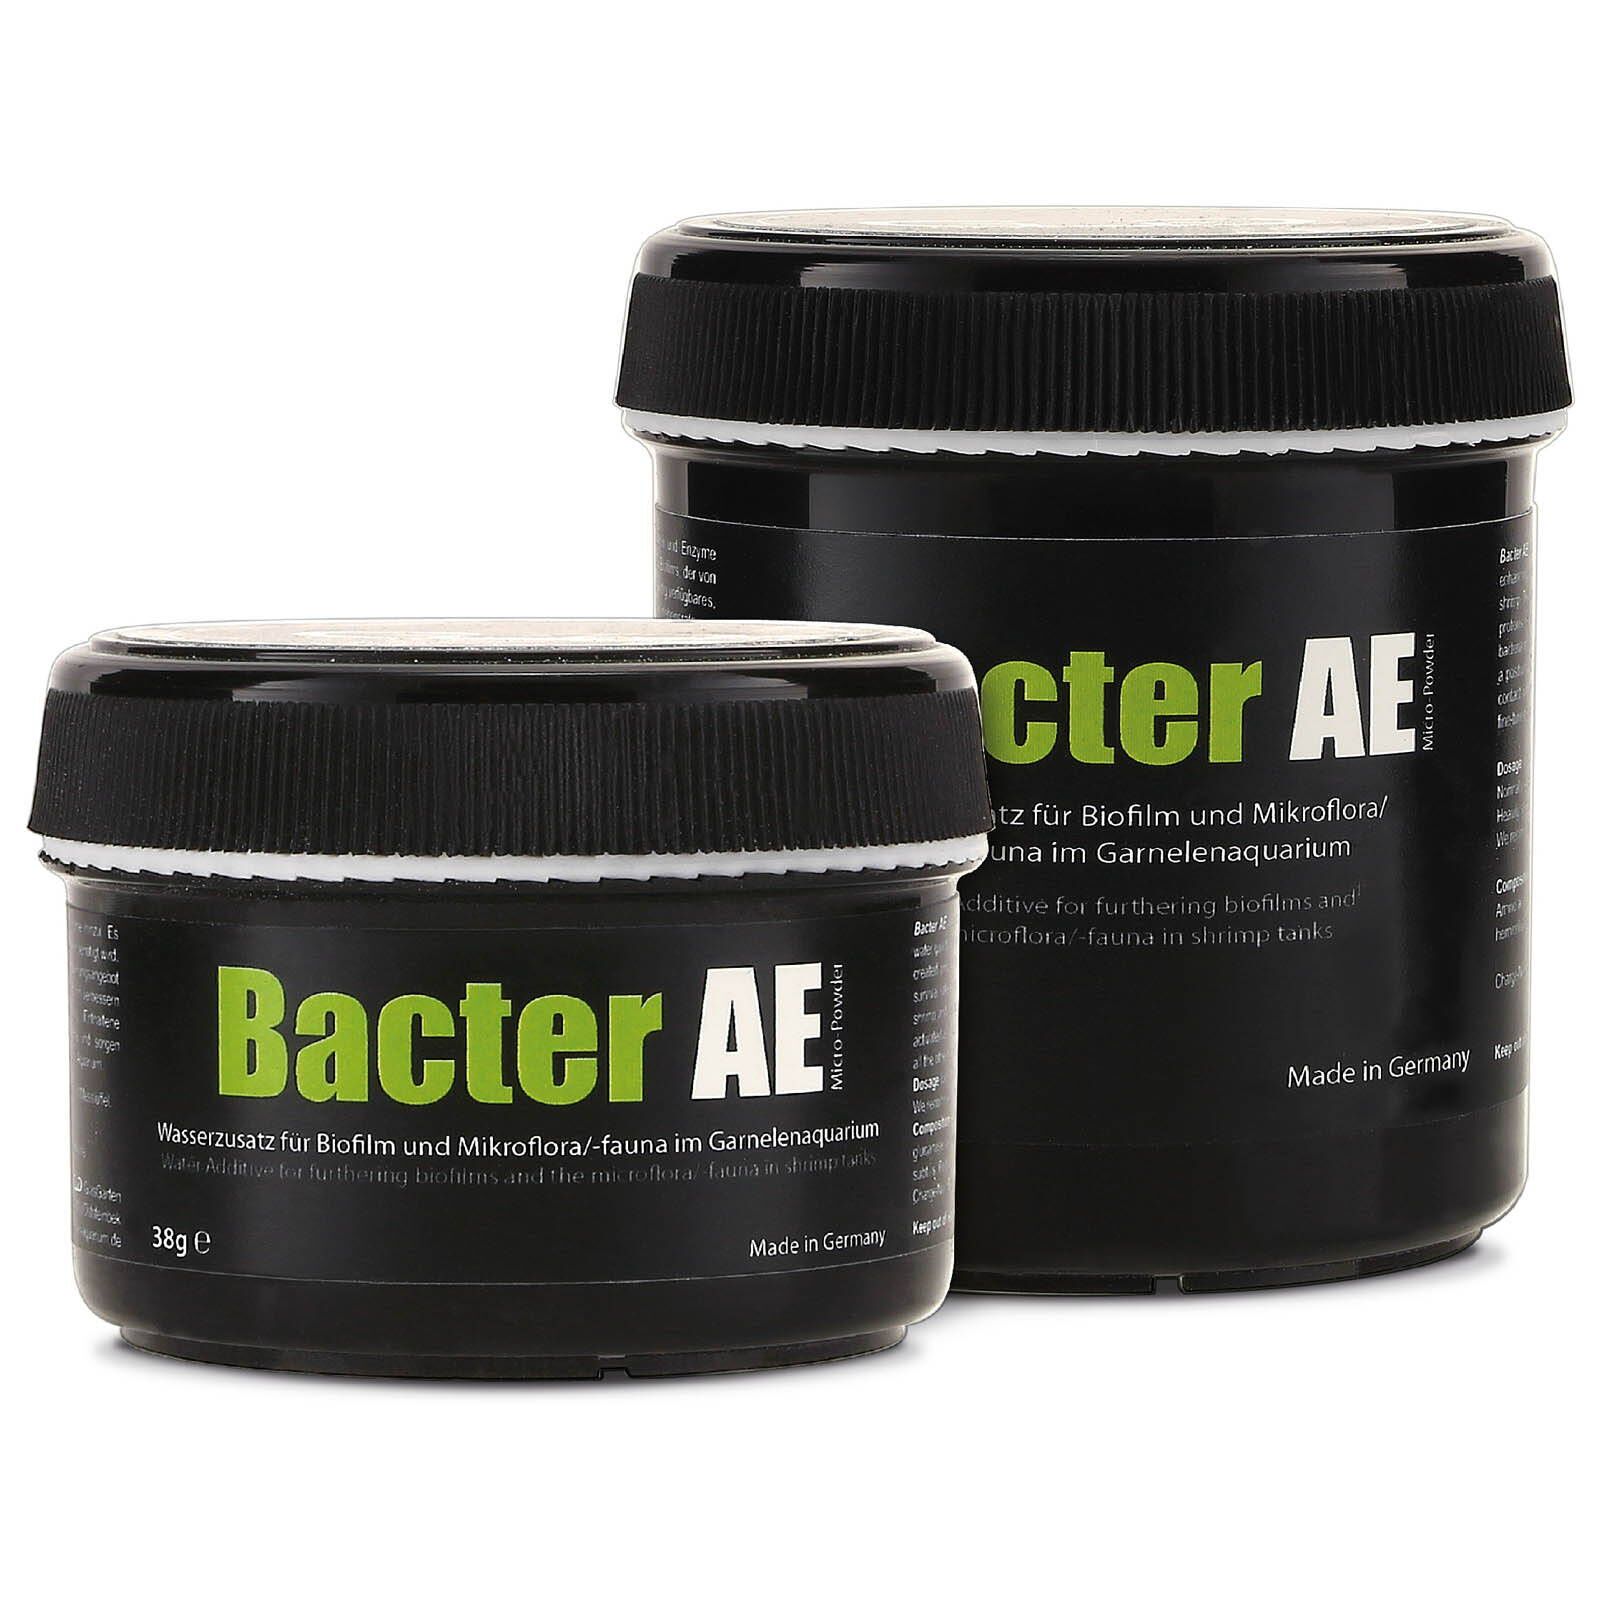 https://www.aquasabi.com/media/image/product/3482/lg/glasgarten-bacter-ae.jpg